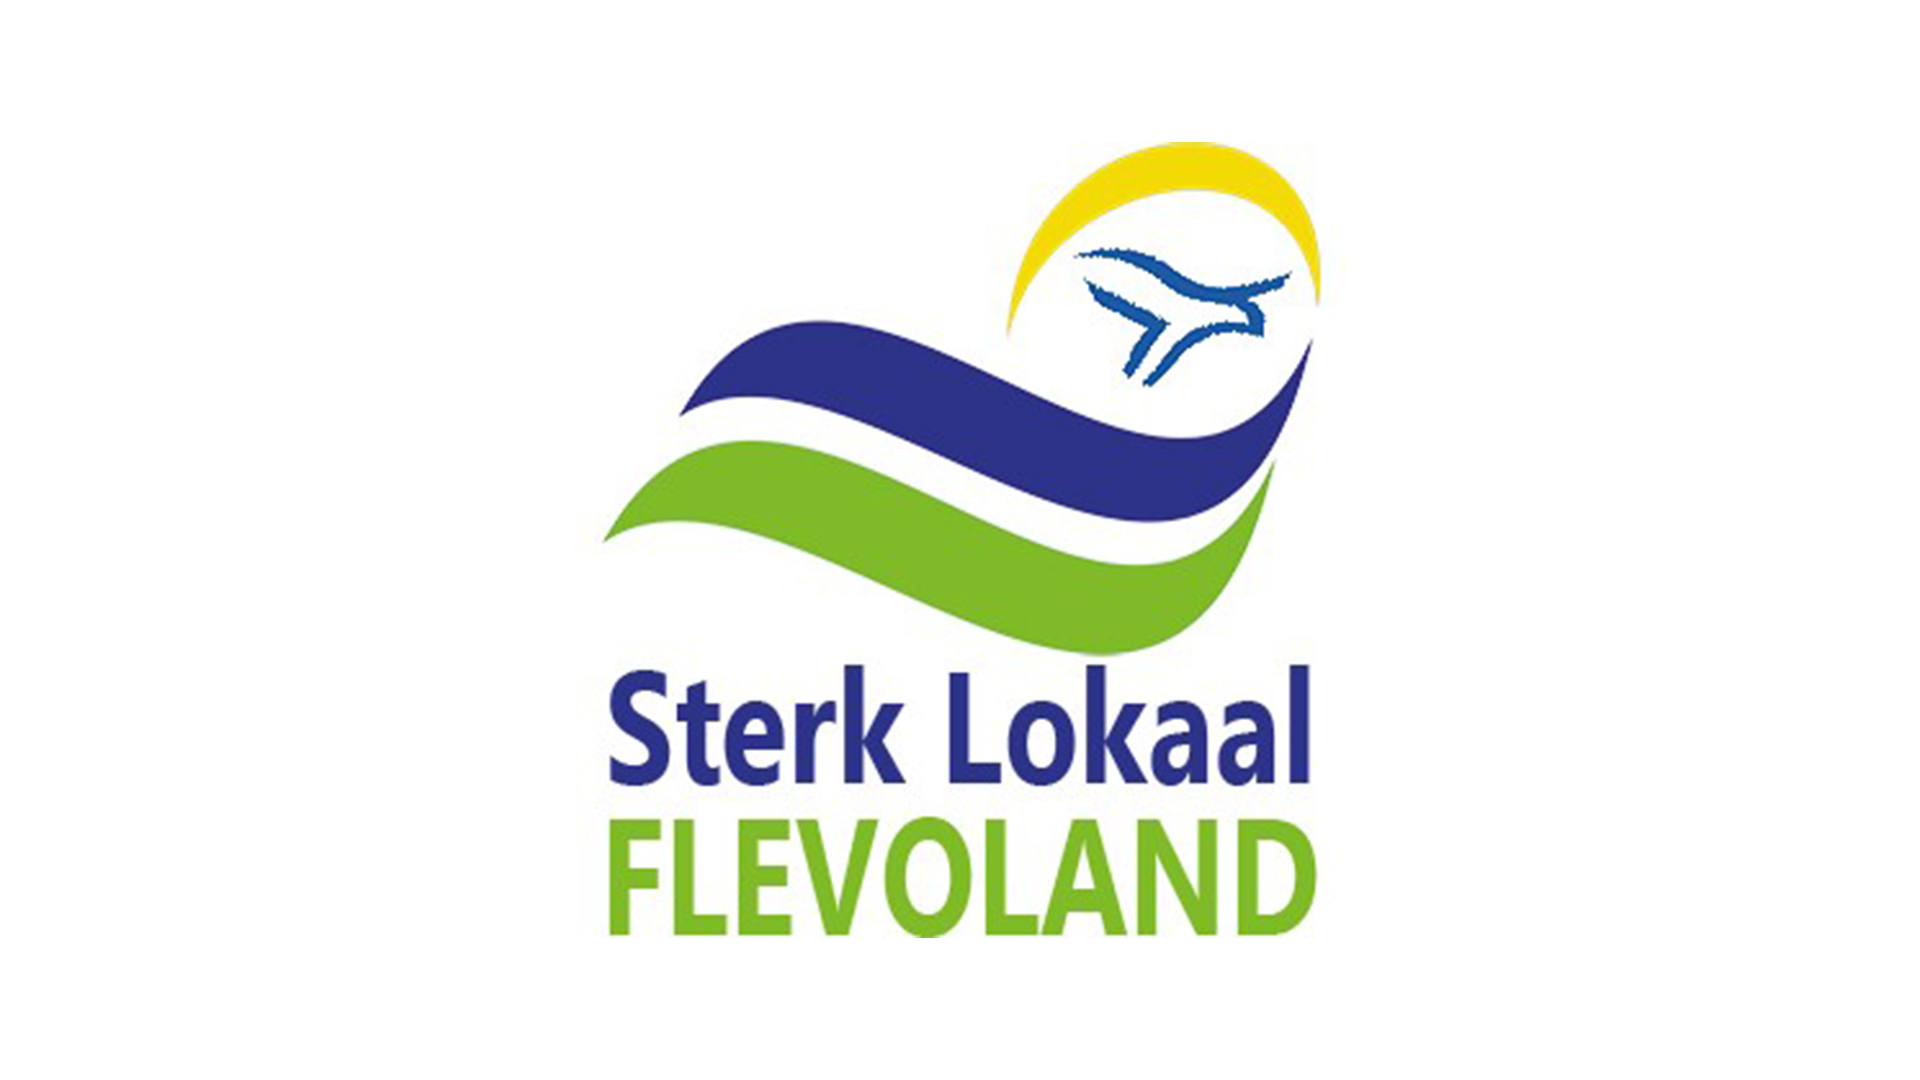 SLF logo